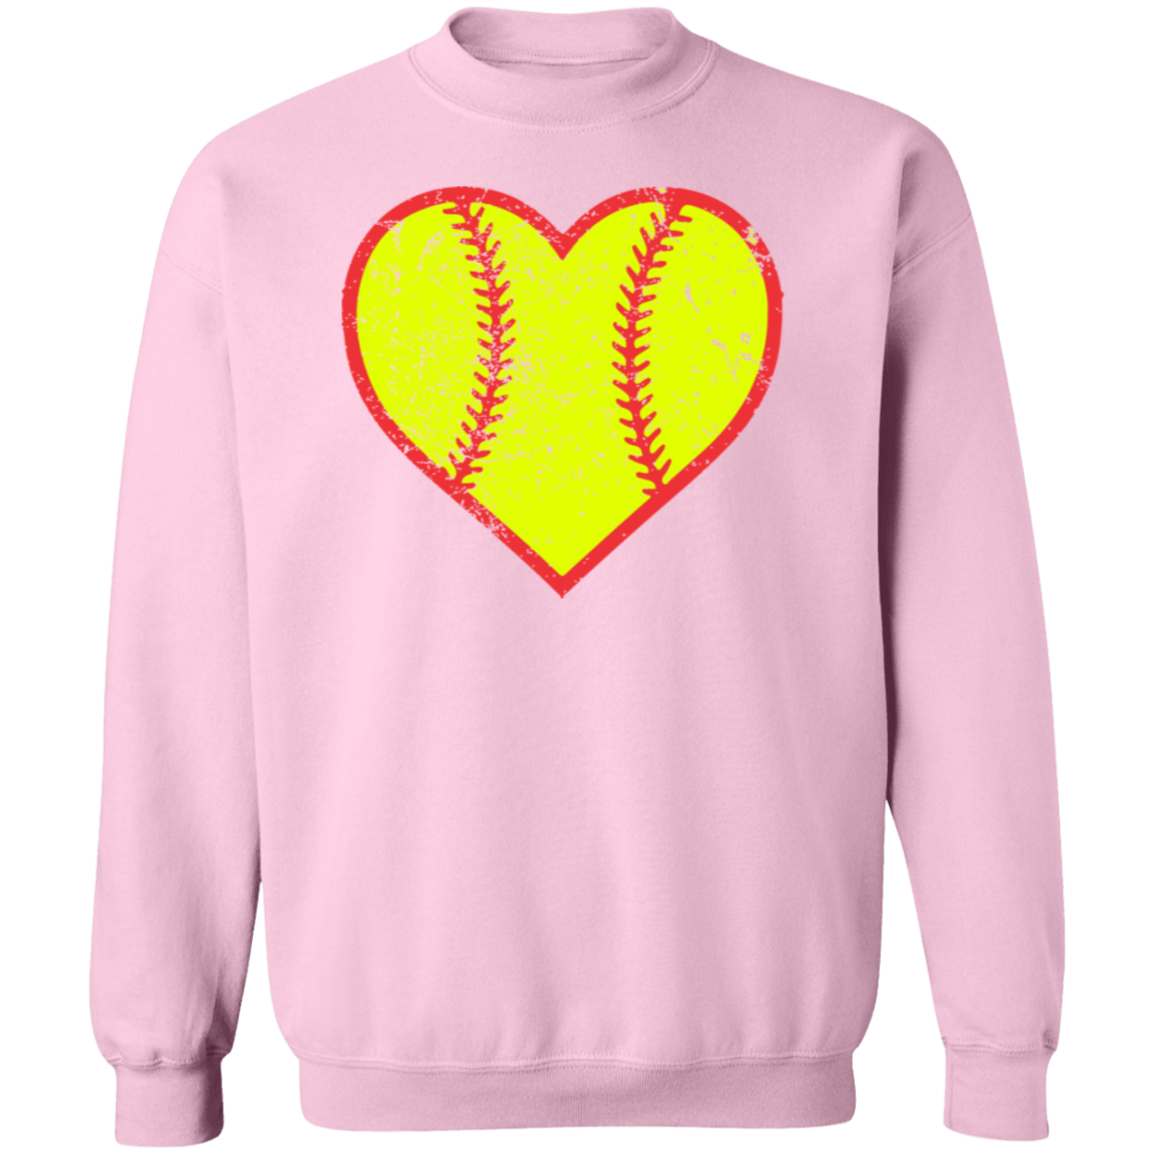 Softball Heart Design Premium Crew Neck Sweatshirt